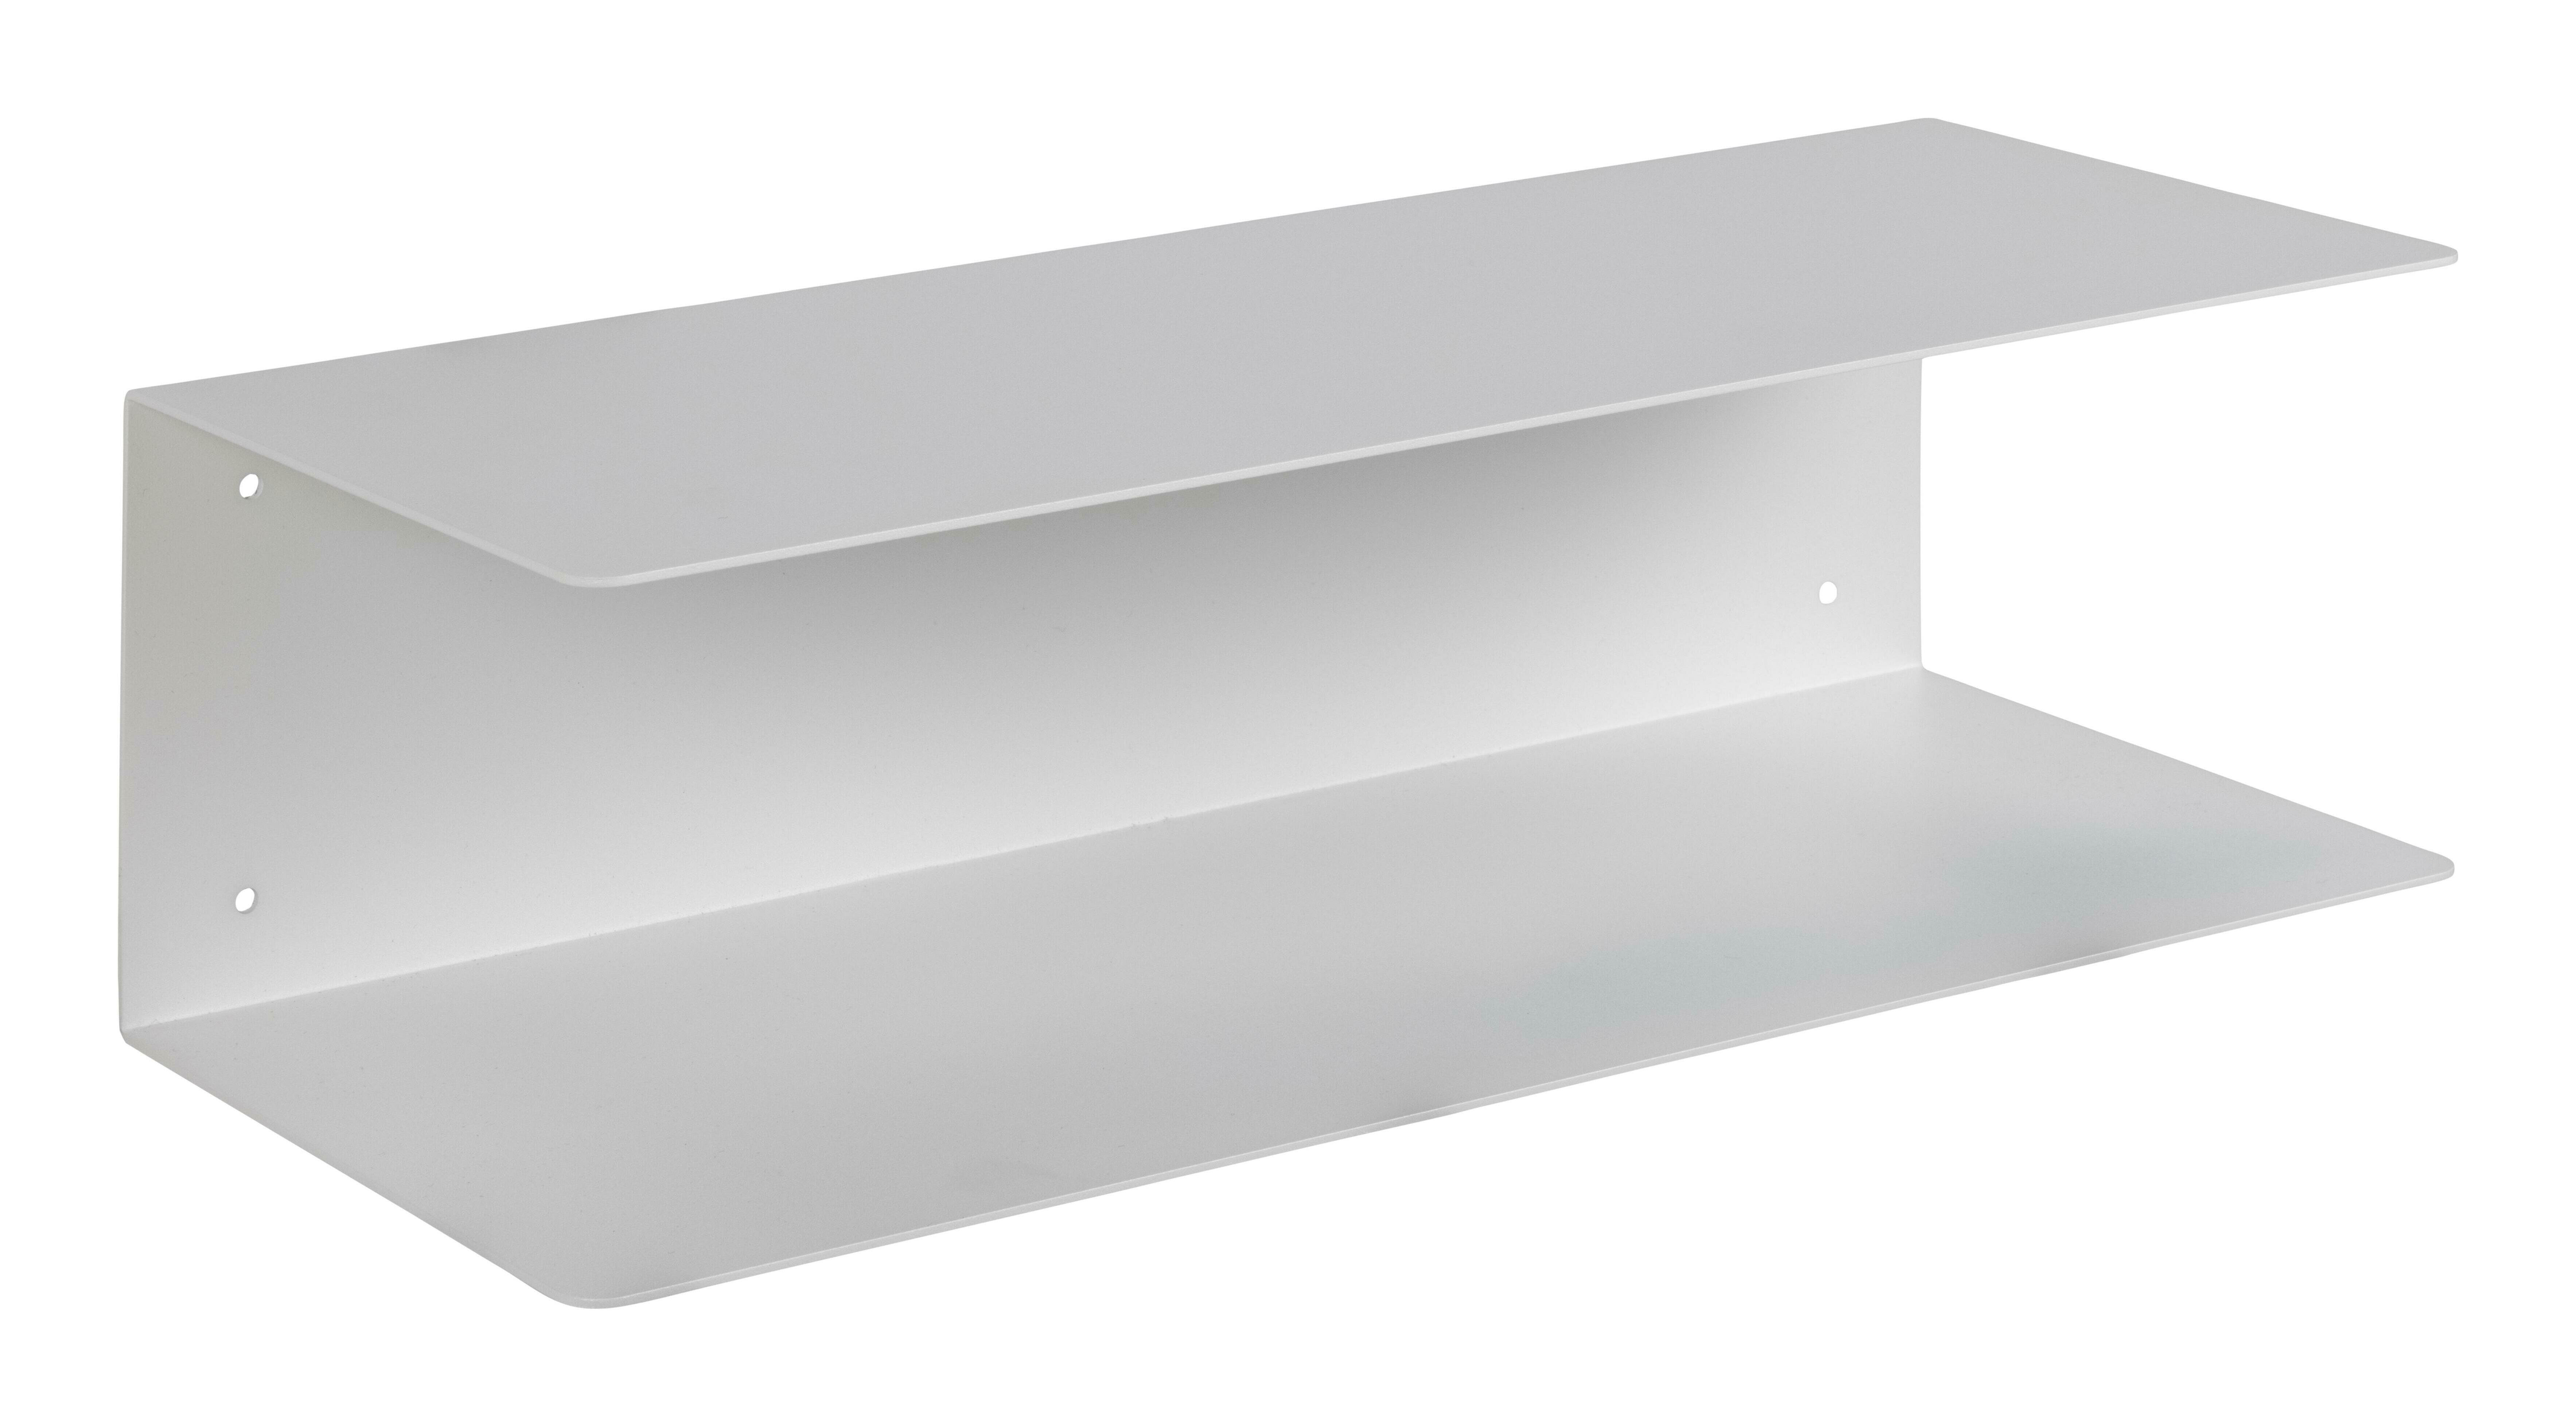 Bendt Wandplank 'Nonny' met dubbele plank, 50cm, kleur Wit